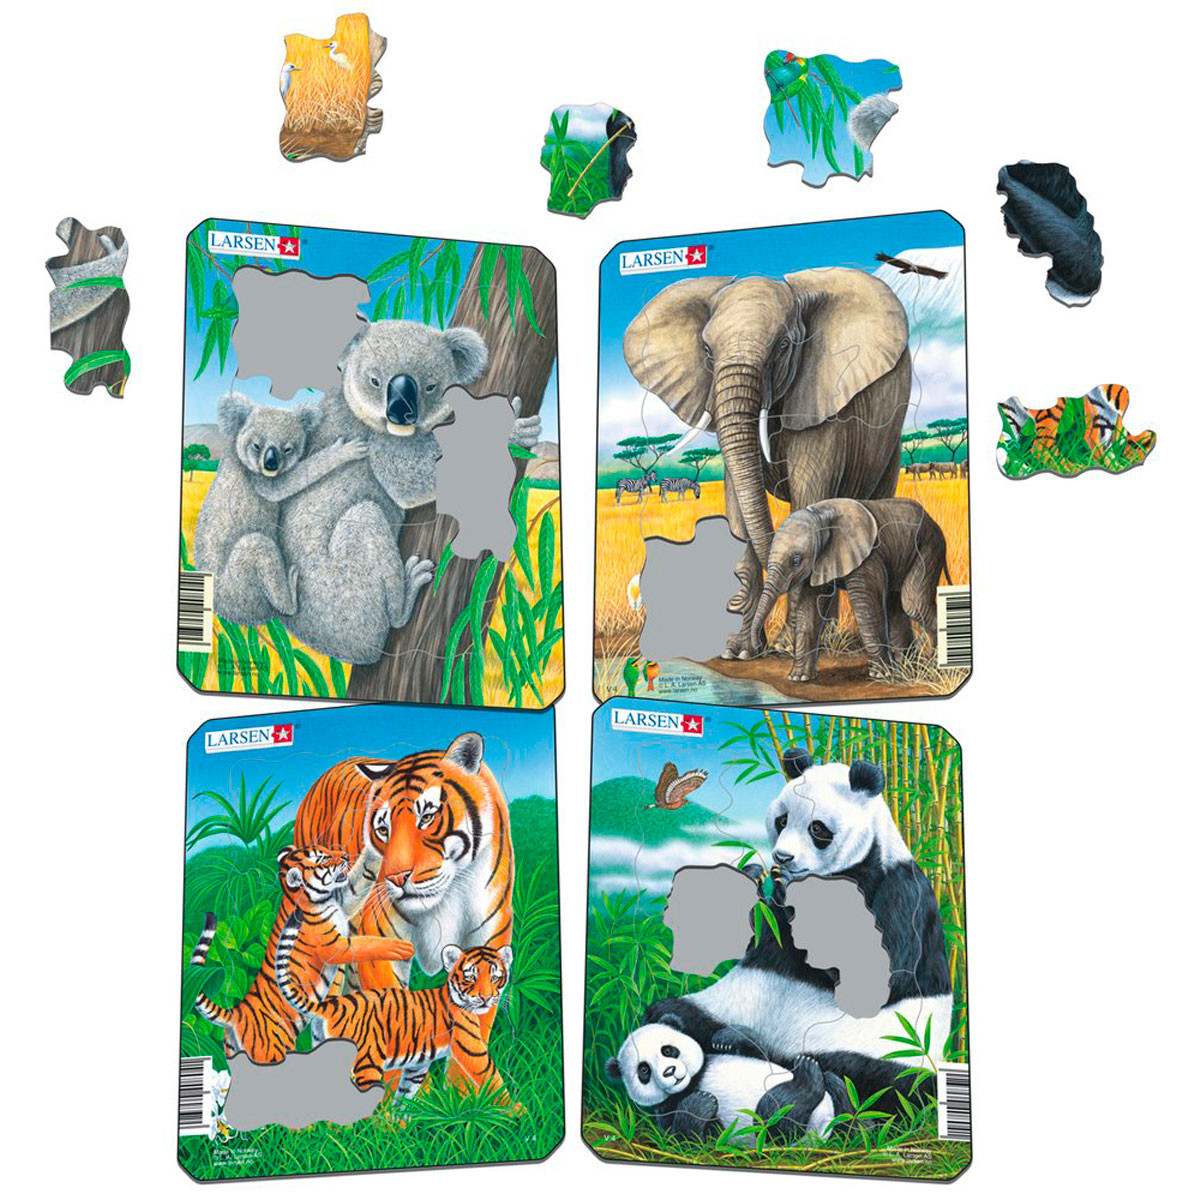 Пазл Дикие животные: коала, слон, тигр, панда, 4 вида, 8 деталей  